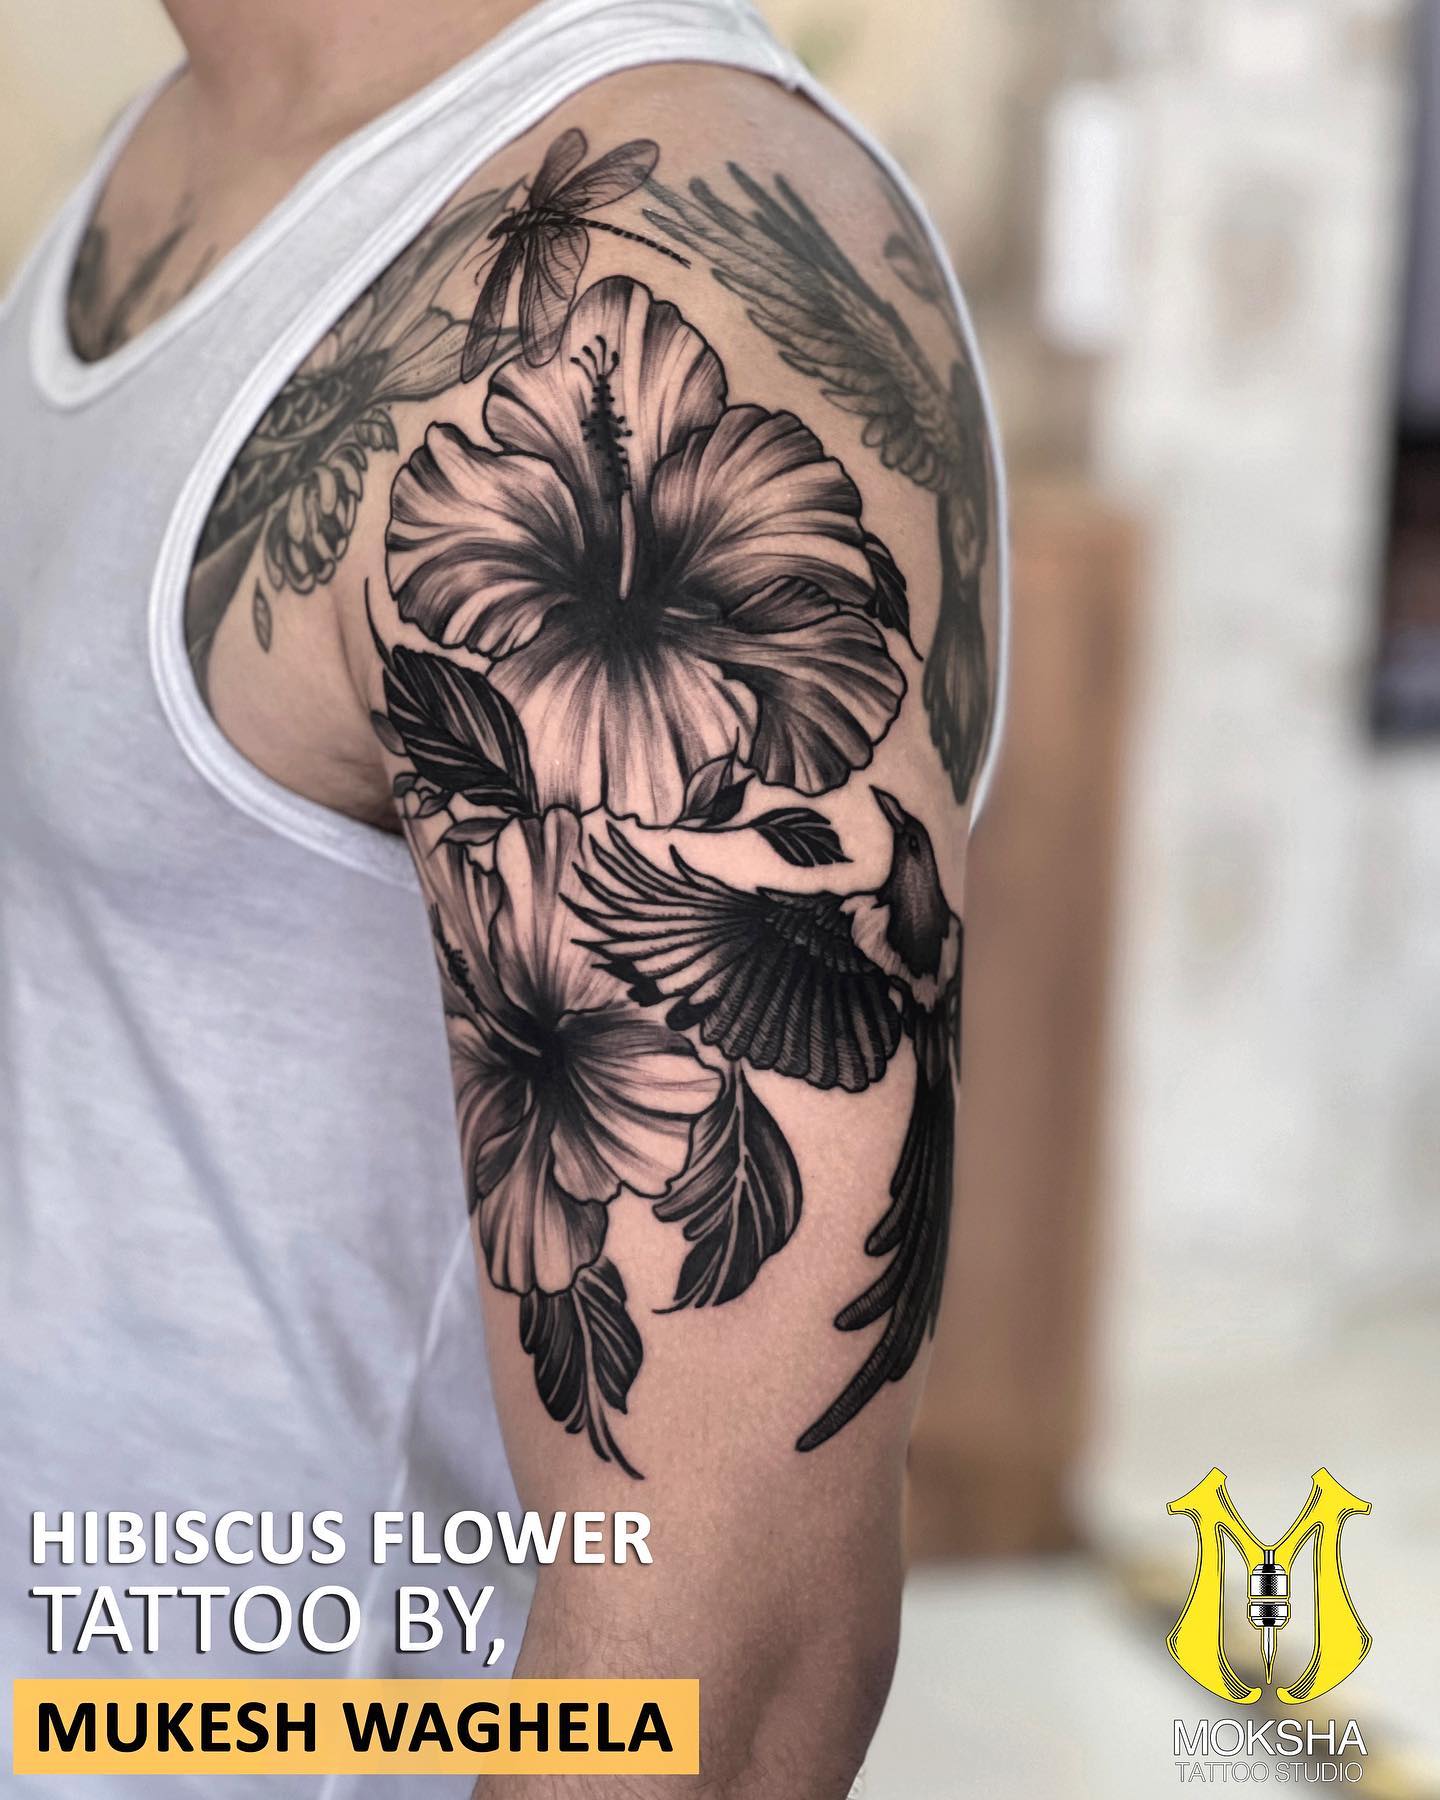 3478 Hibiscus Tattoo Design Images Stock Photos  Vectors  Shutterstock